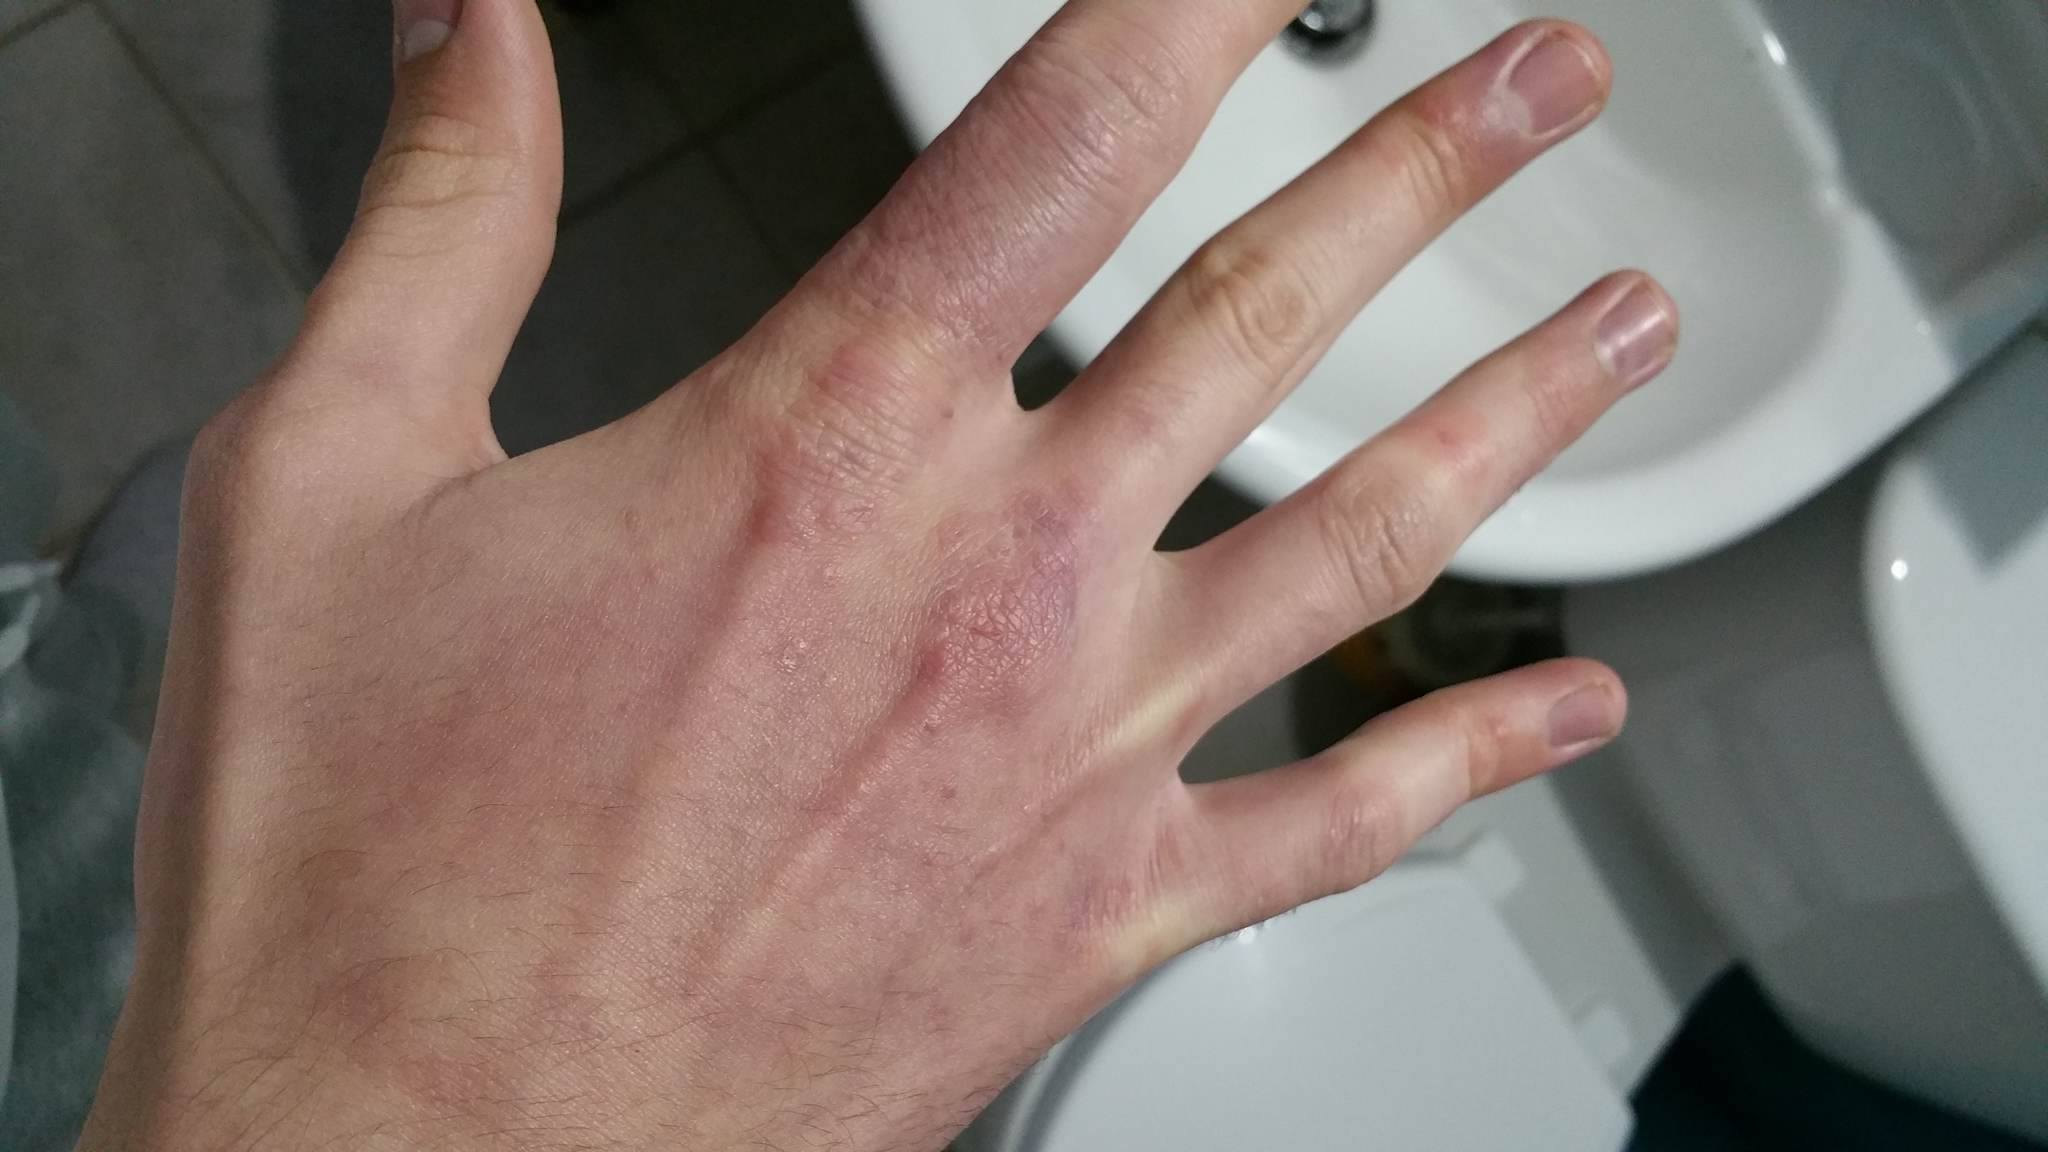 Hand Rash On Accutane Prescription Acne Medications By Nick100998